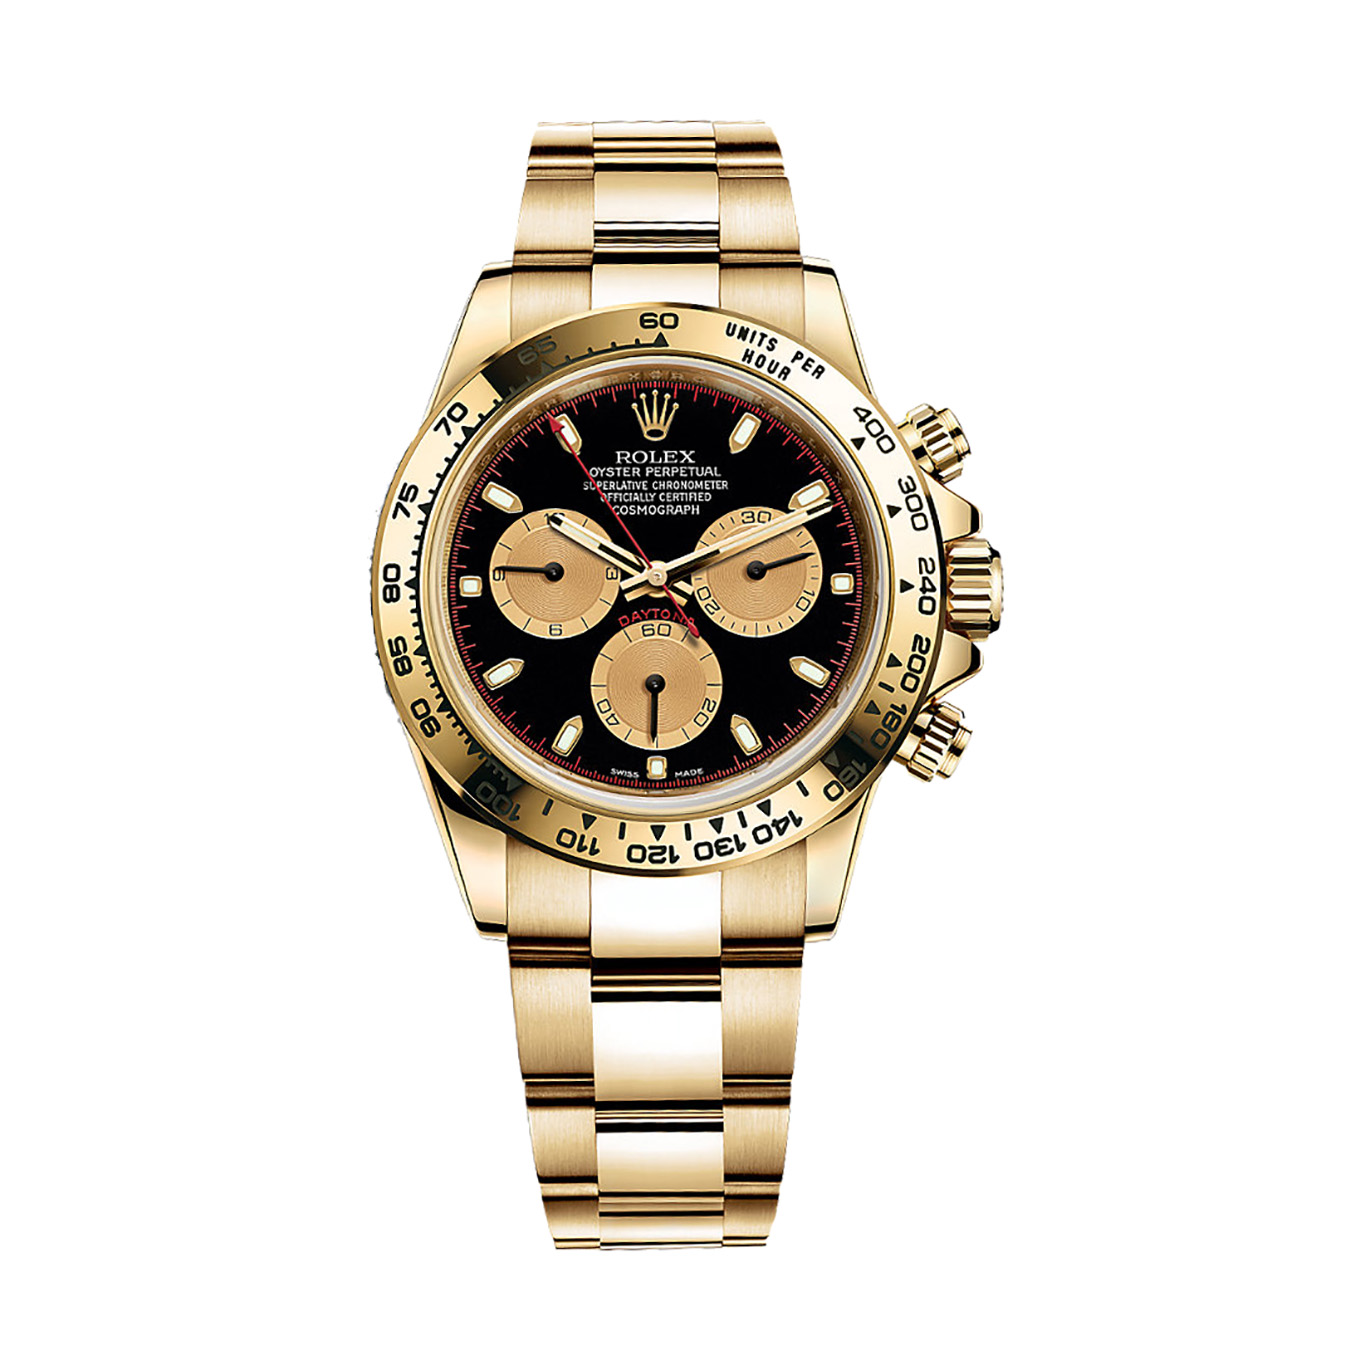 Cosmograph Daytona 116508 Gold Watch (Black and Champagne)